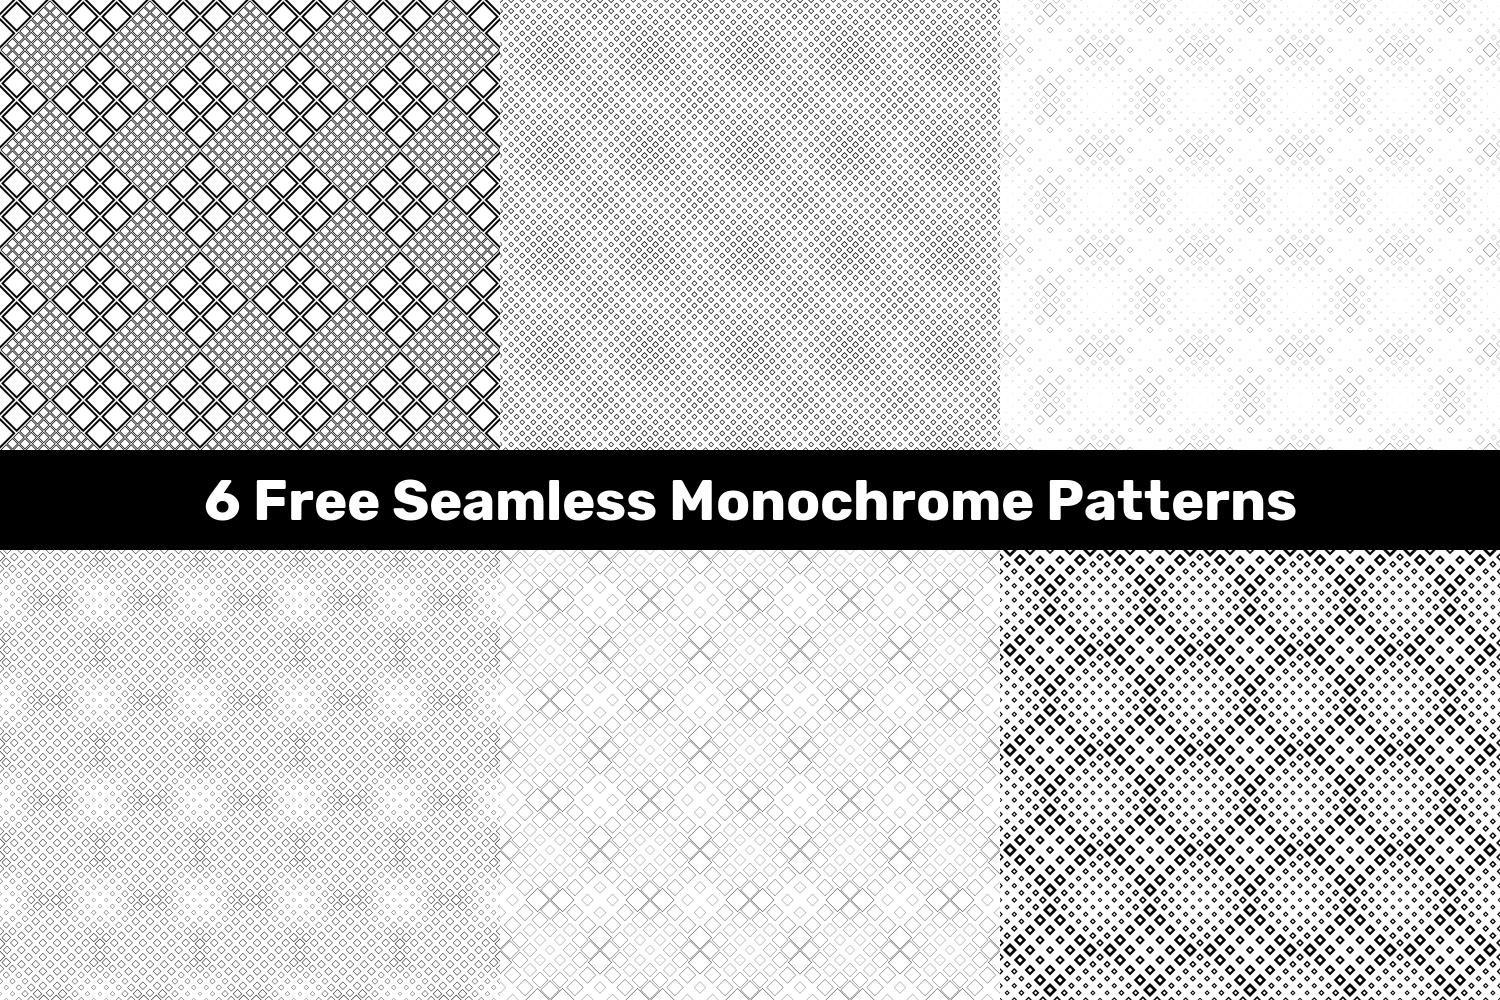 6 Free Seamless Monochrome Patterns